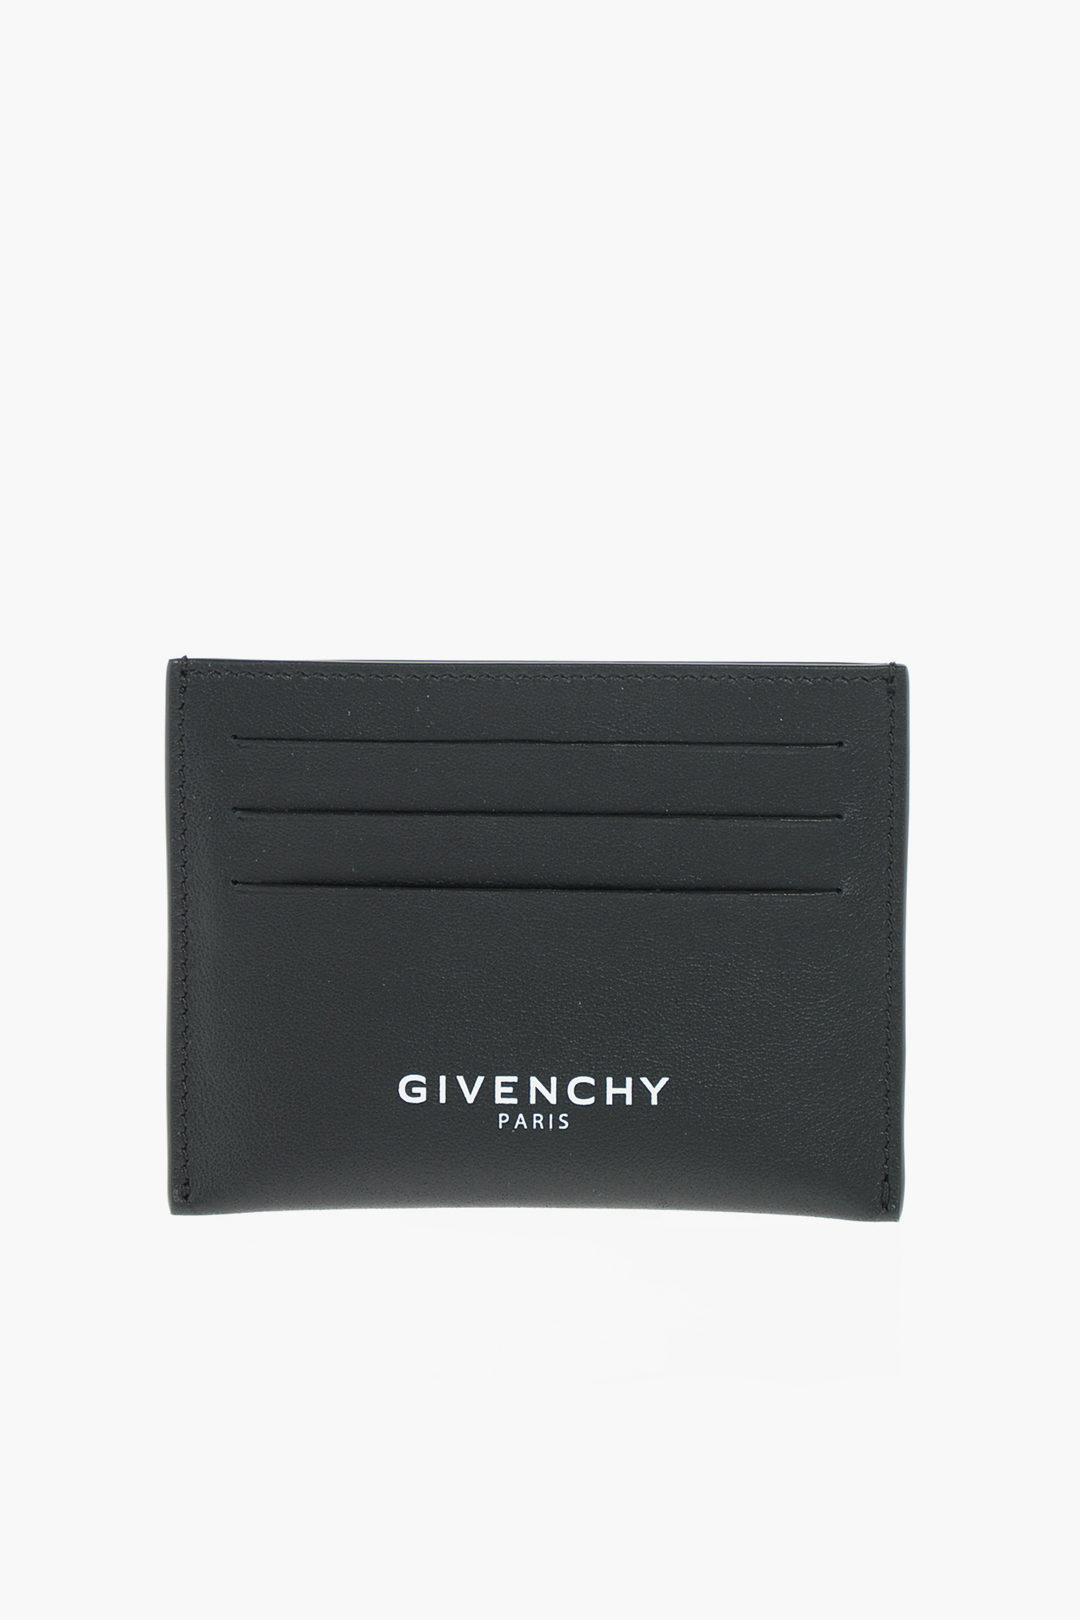 Givenchy leather card holder men - Glamood Outlet